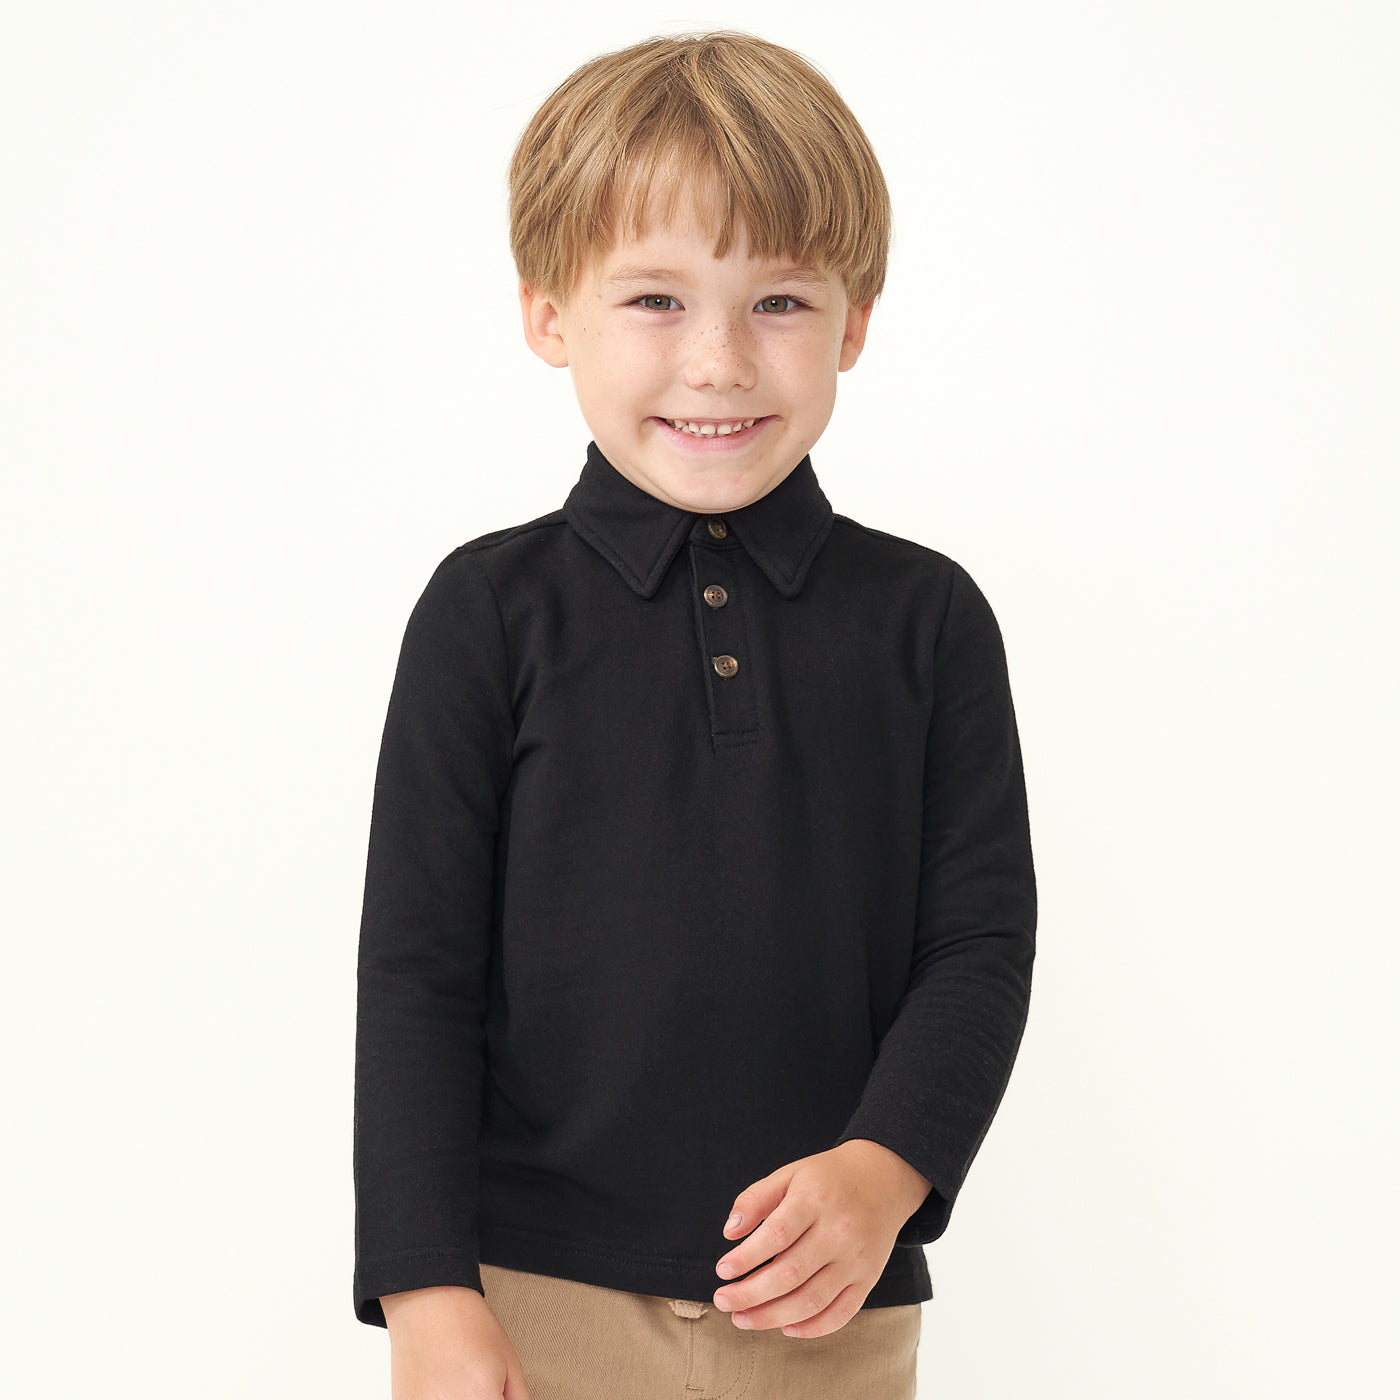 Child wearing a Black polo shirt